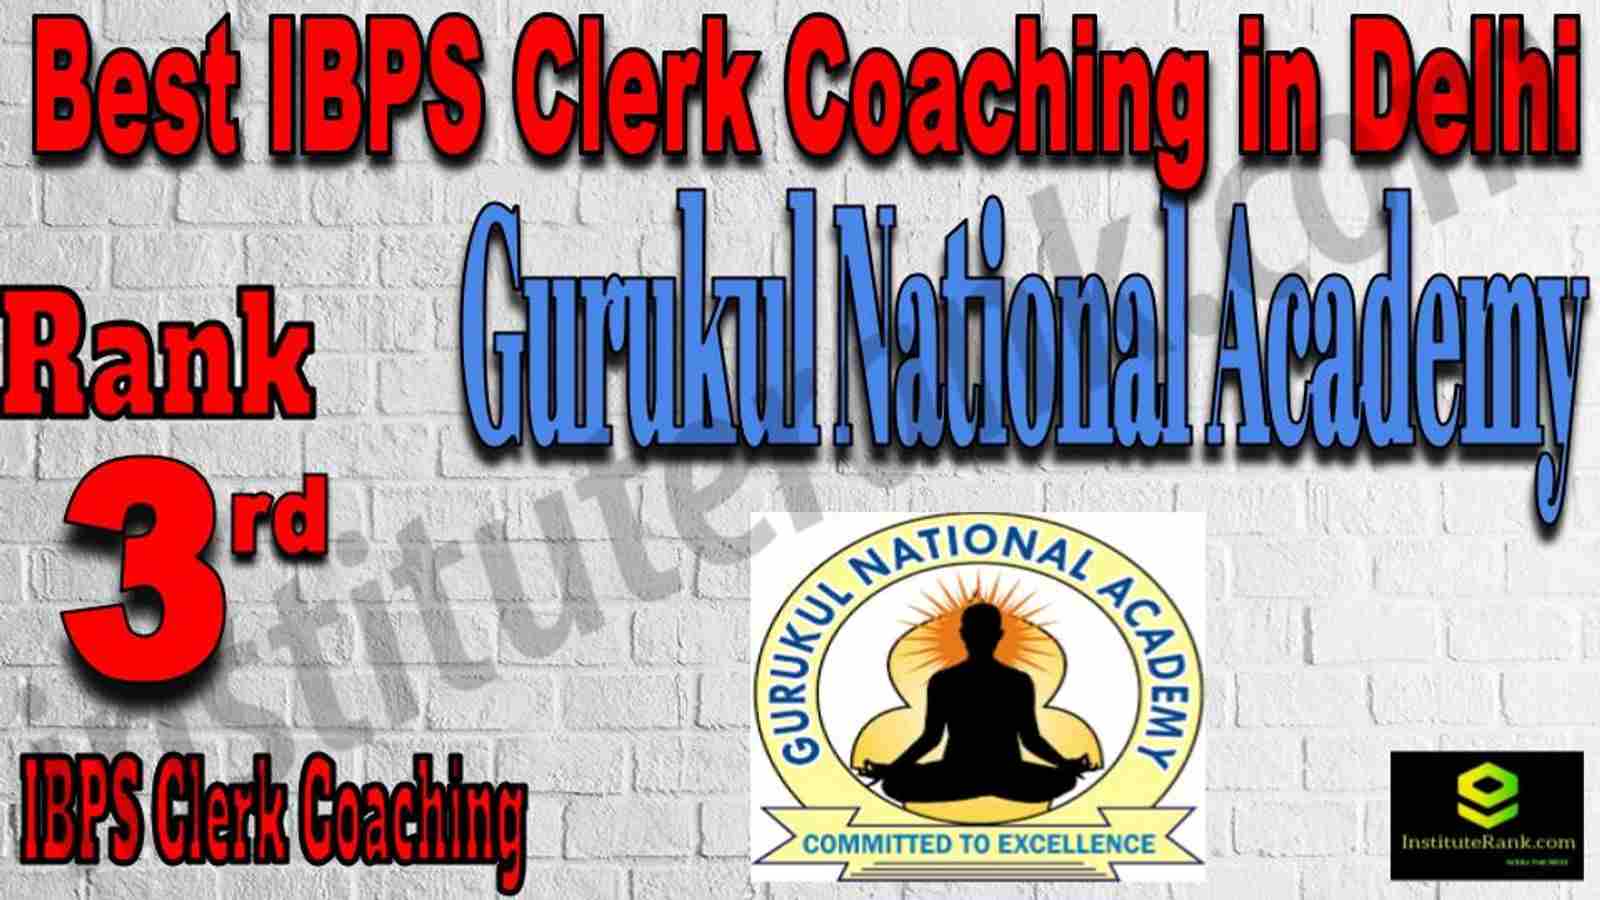 Rank 3 Best IBPS Clerk Coaching in Delhi